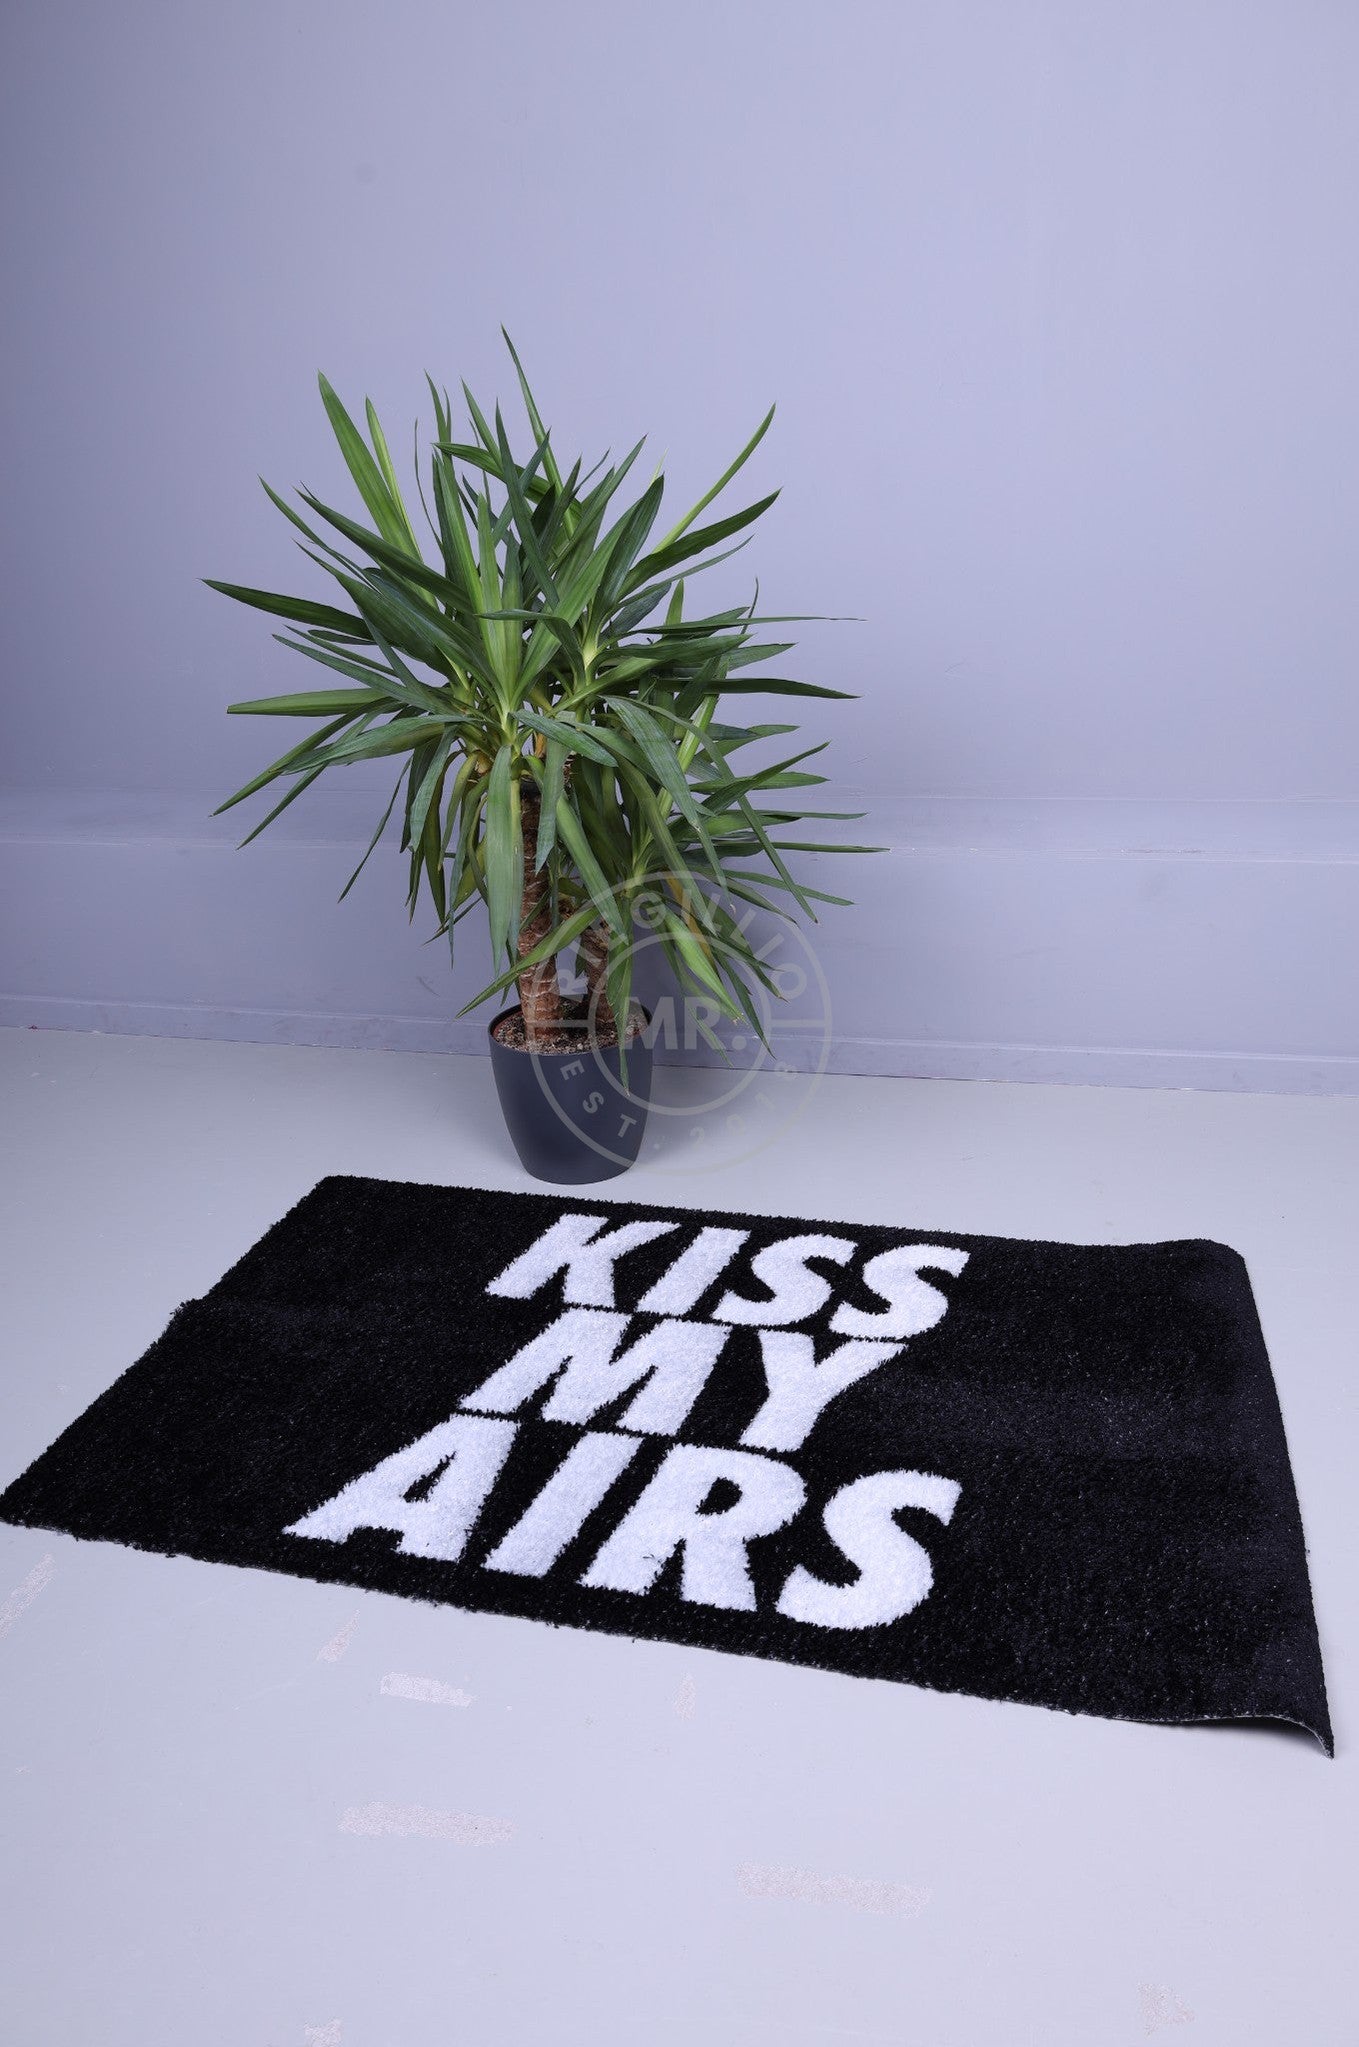 Doormat - KISS MY AIRS - Black-at MR. Riegillio